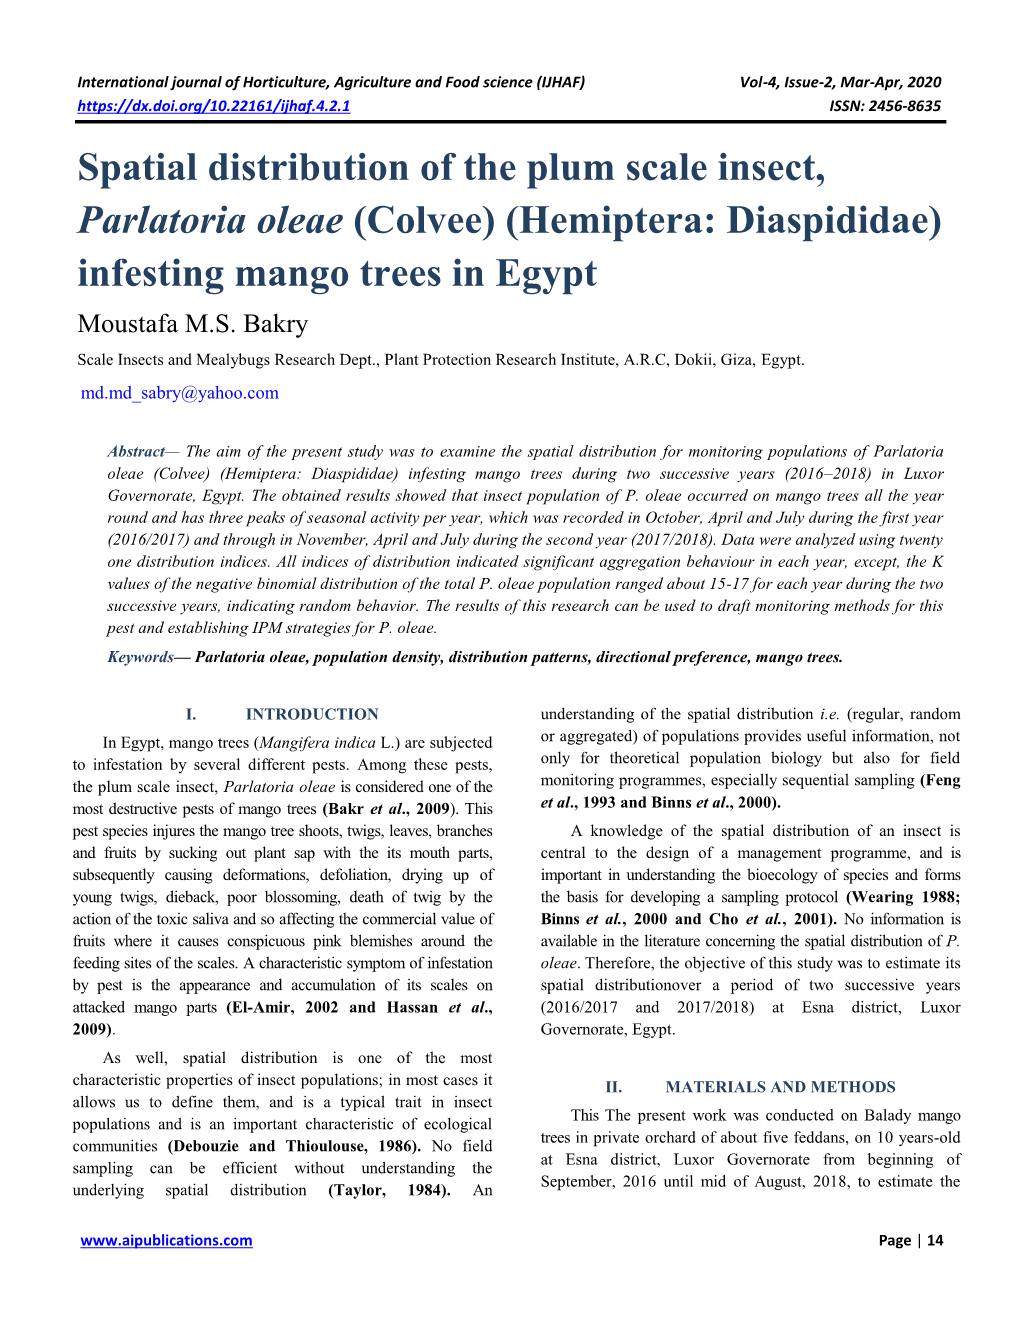 Spatial Distribution of the Plum Scale Insect, Parlatoria Oleae (Colvee) (Hemiptera: Diaspididae) Infesting Mango Trees in Egypt Moustafa M.S